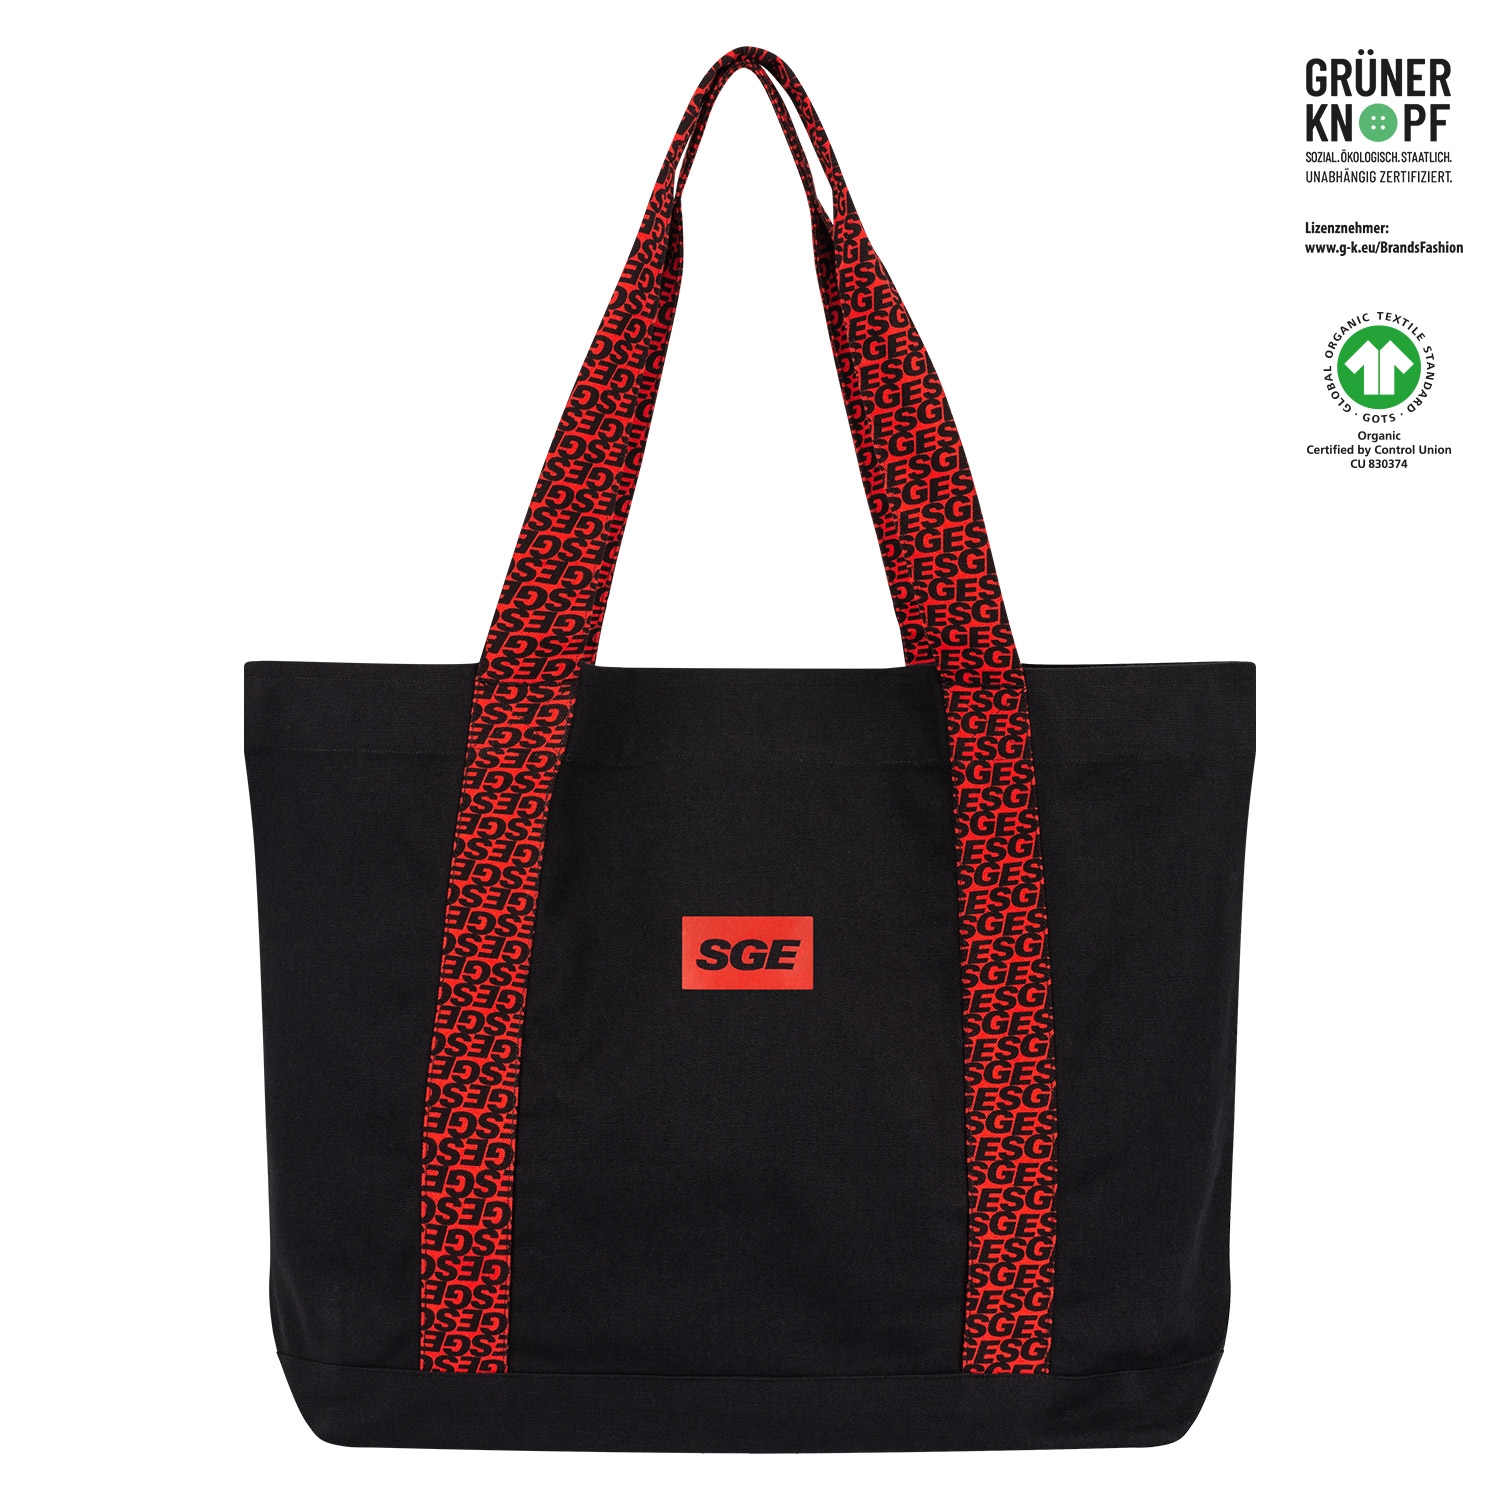 Bild 1: Shopping Bag Red SGE